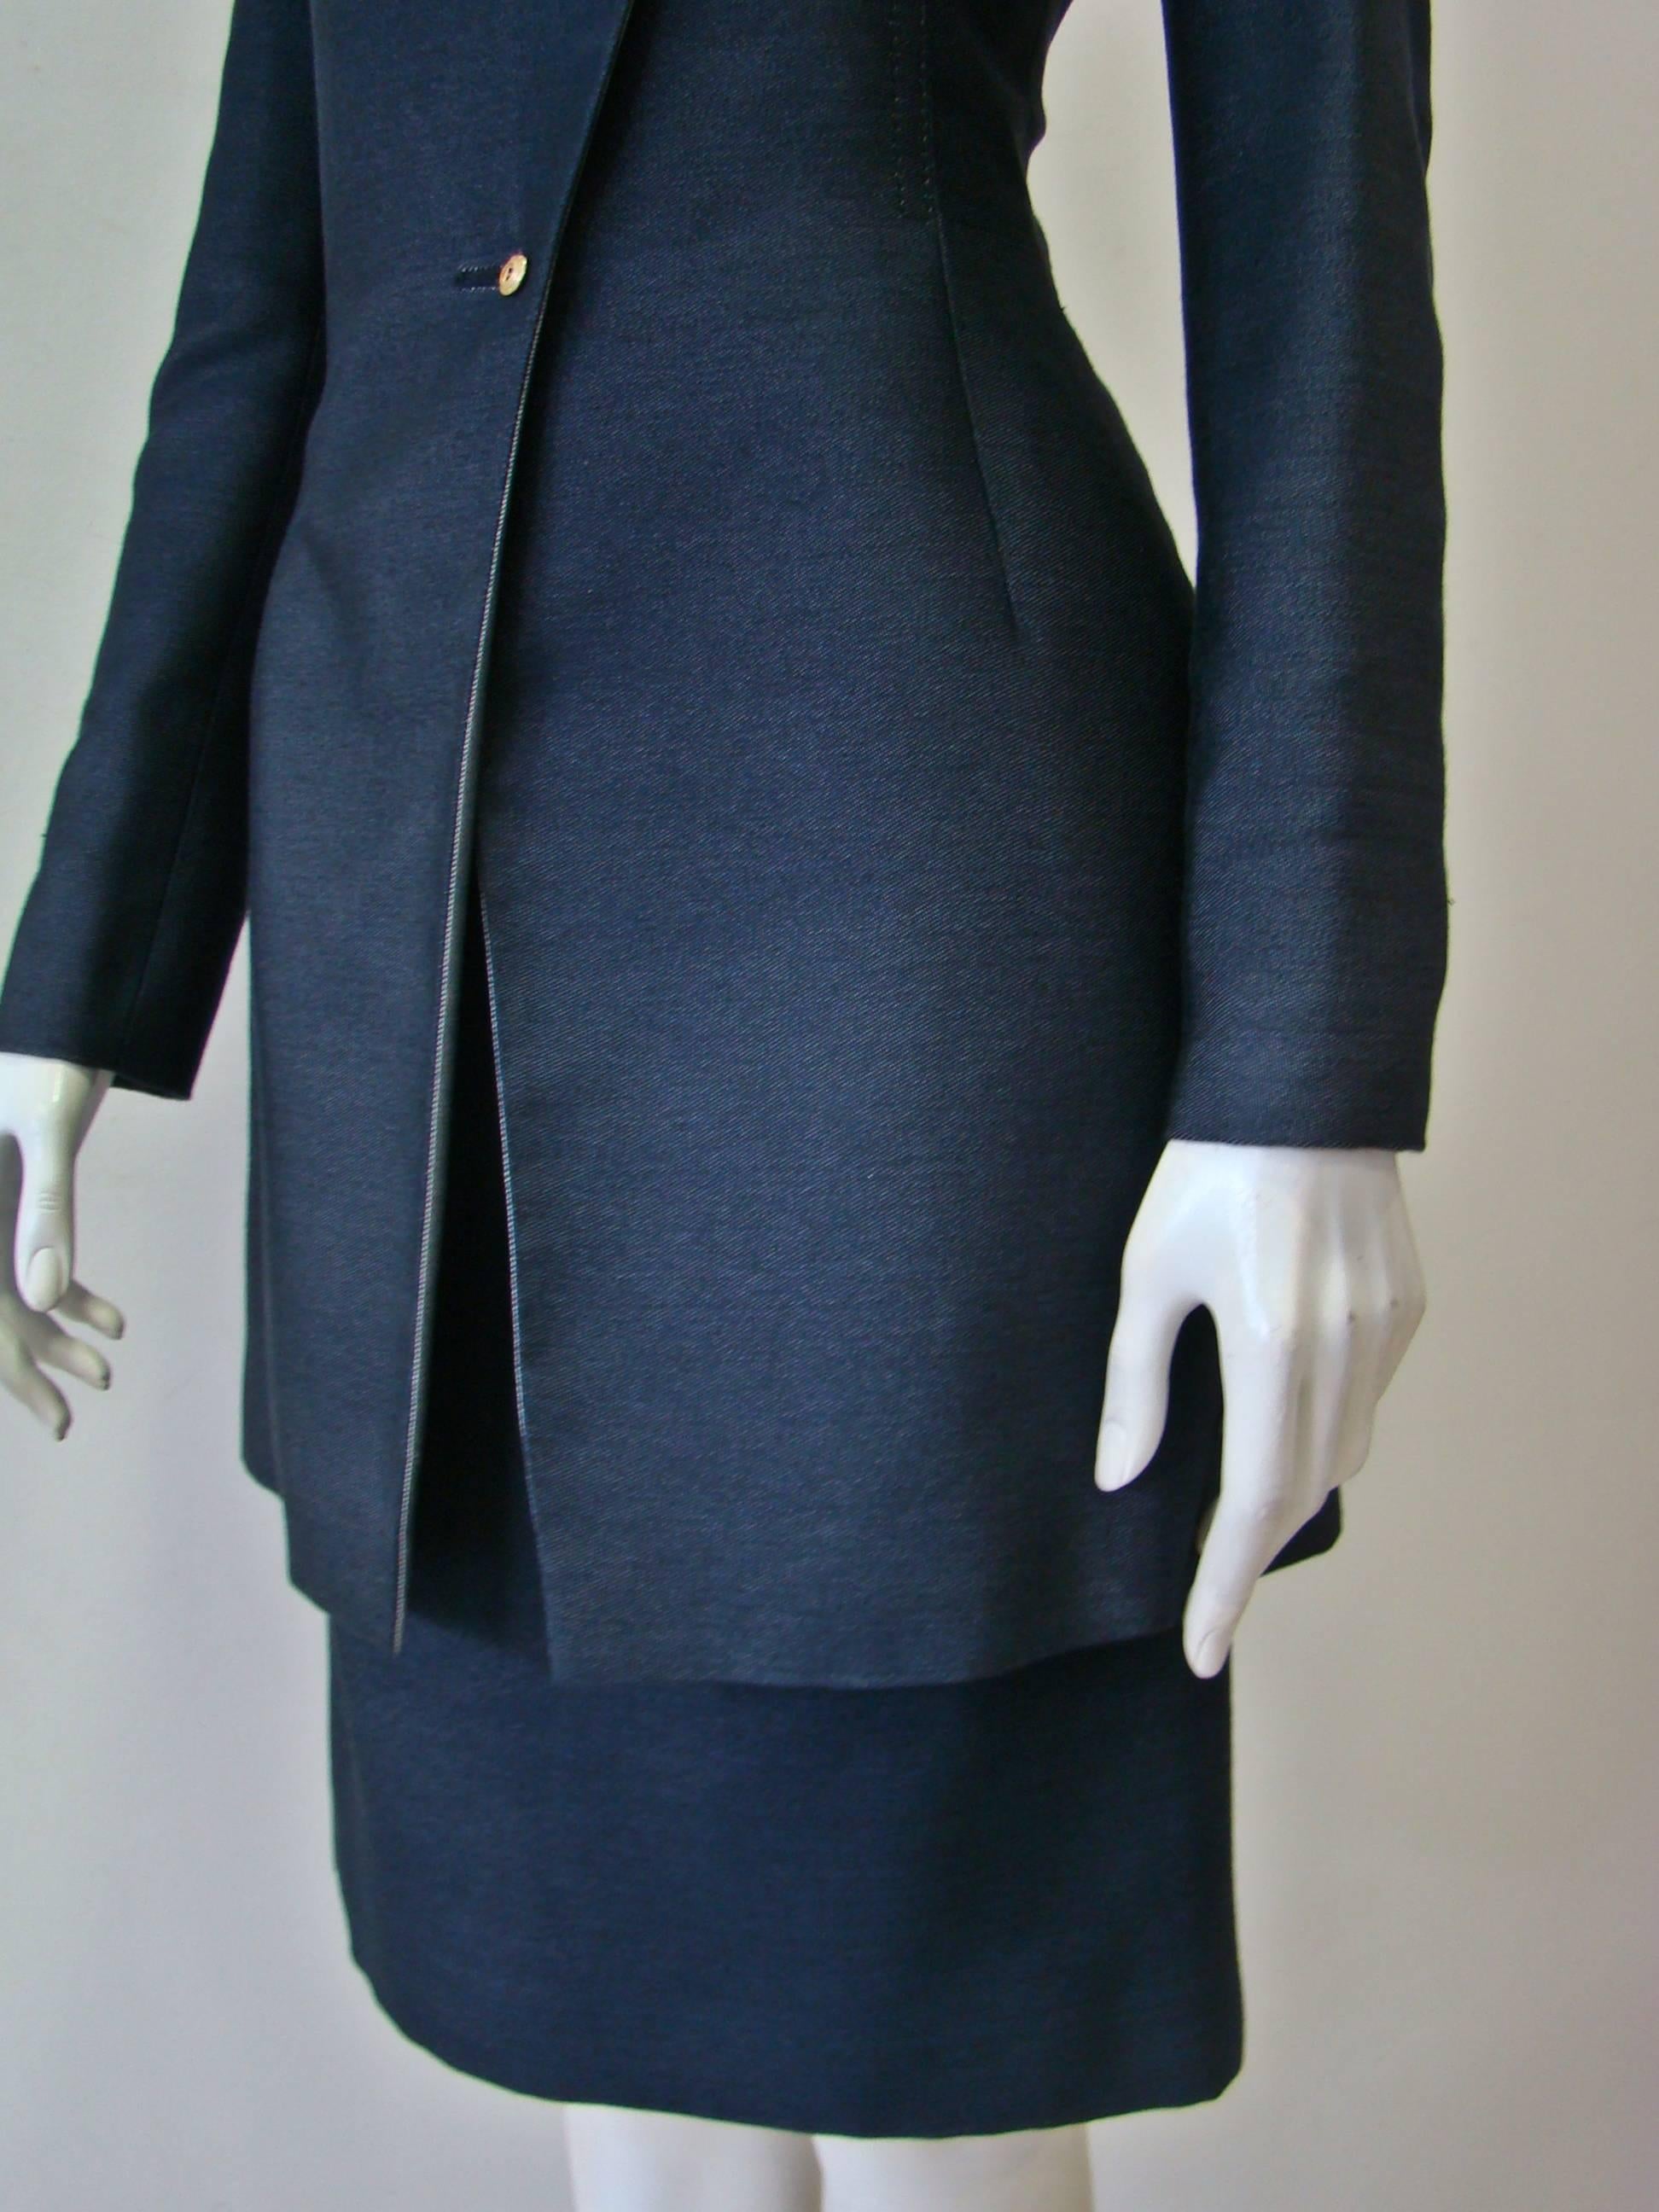 Rare Gianfranco Ferre Skirt Suit For Sale 2